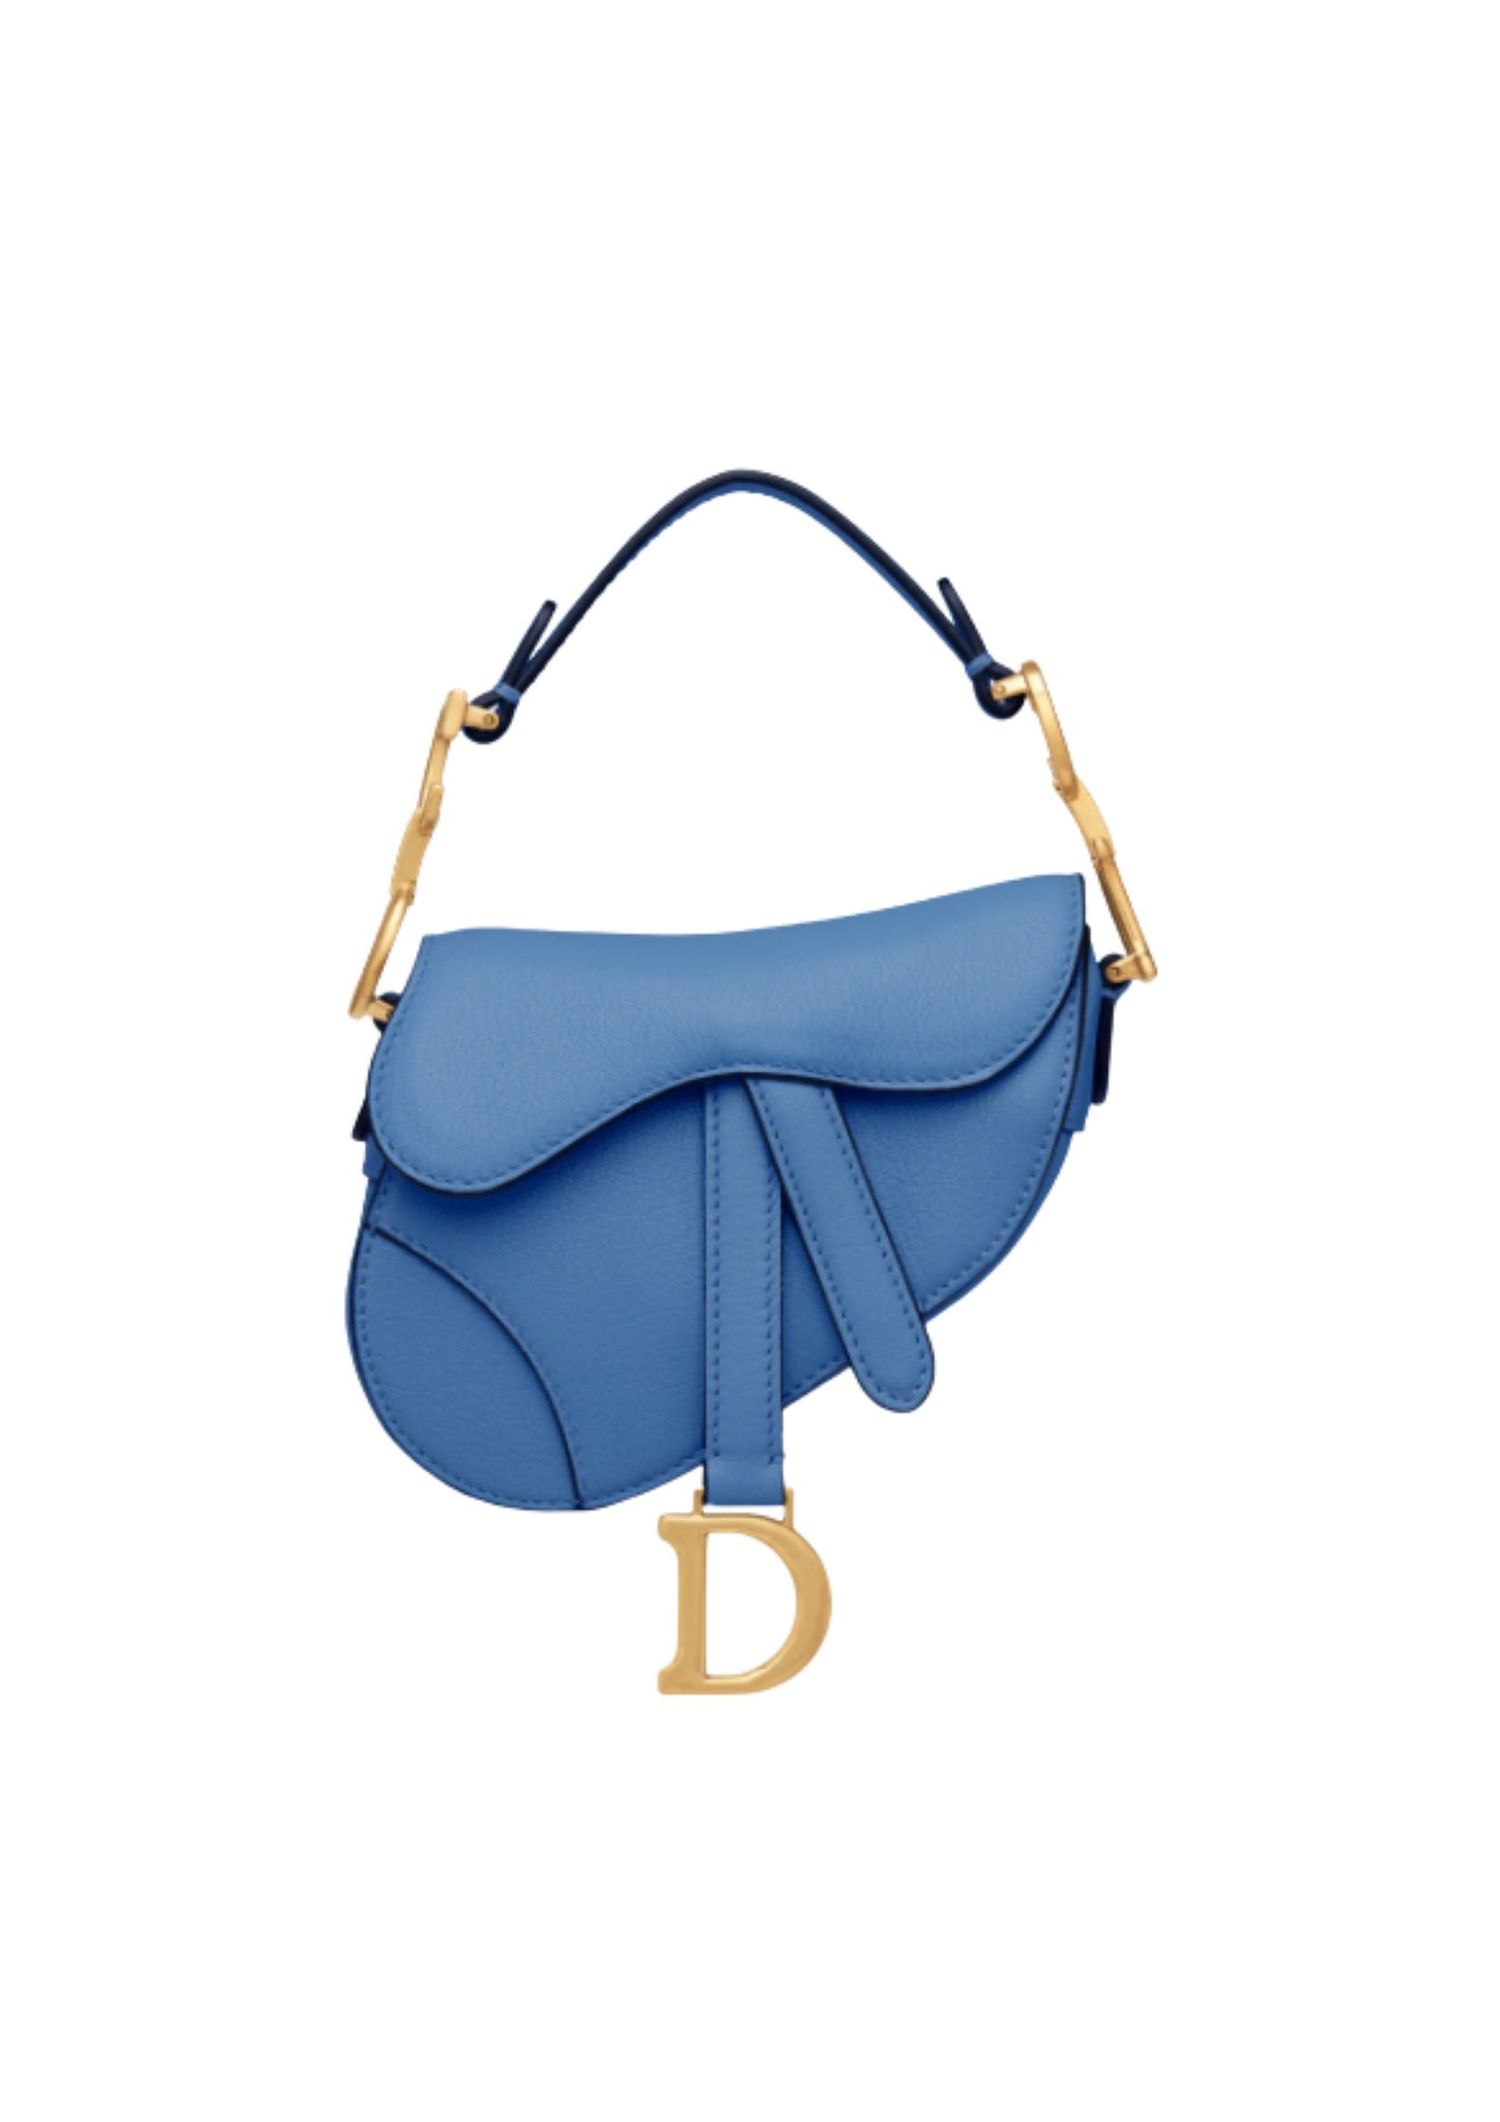 Creative designer turns luxury gift bags into wearable handbags